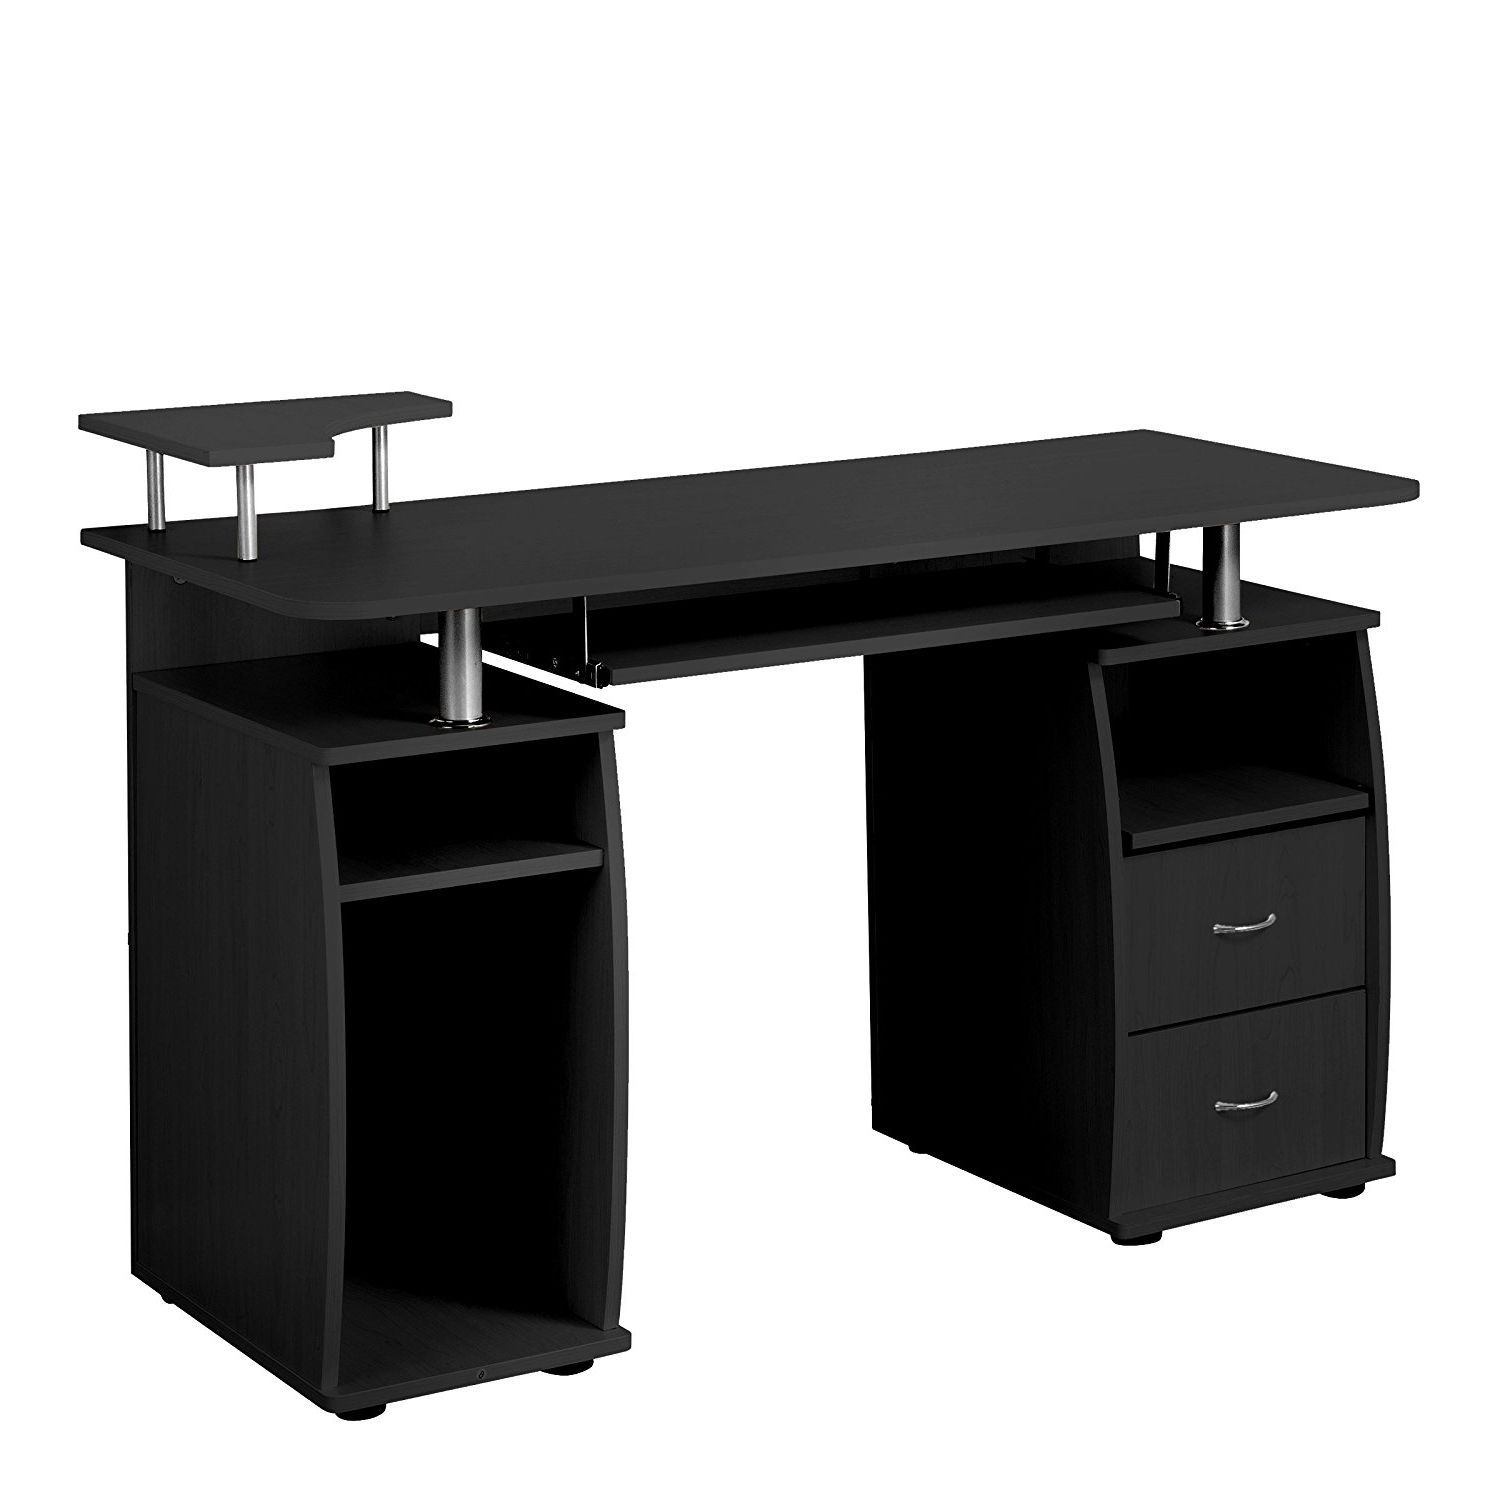 Furniture : Thin Computer Desk Cherry Wood Computer Desk Regarding Best And Newest Black Computer Desks (View 9 of 20)